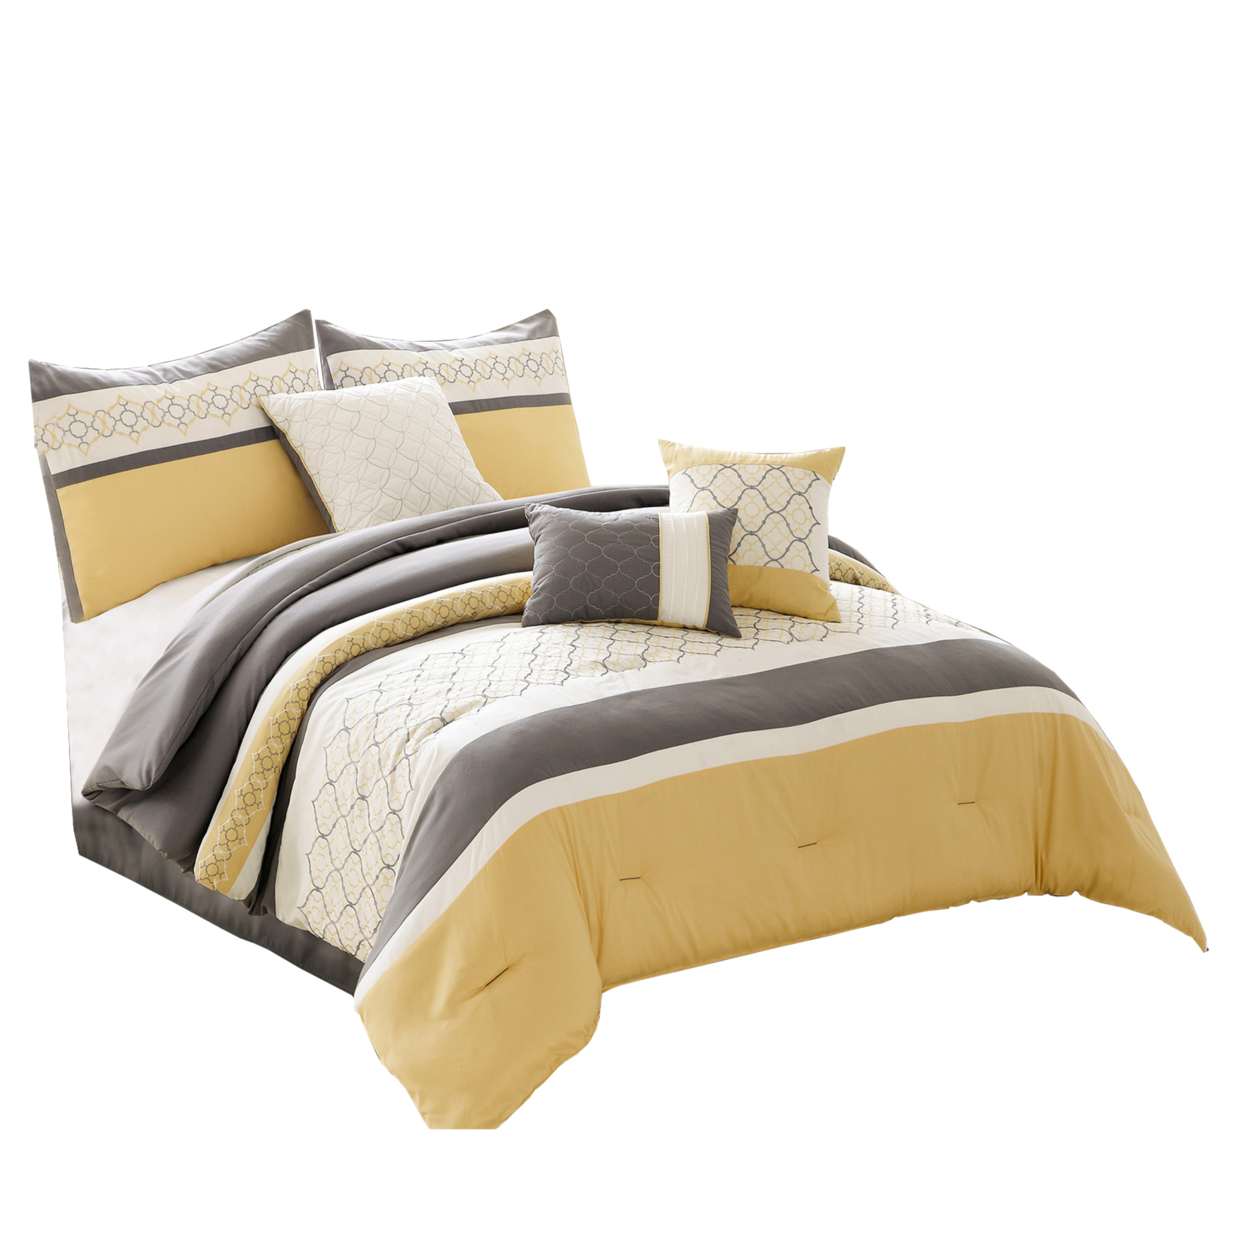 Quatrefoil Print King Size 7 Piece Fabric Comforter Set, Yellow And Gray- Saltoro Sherpi